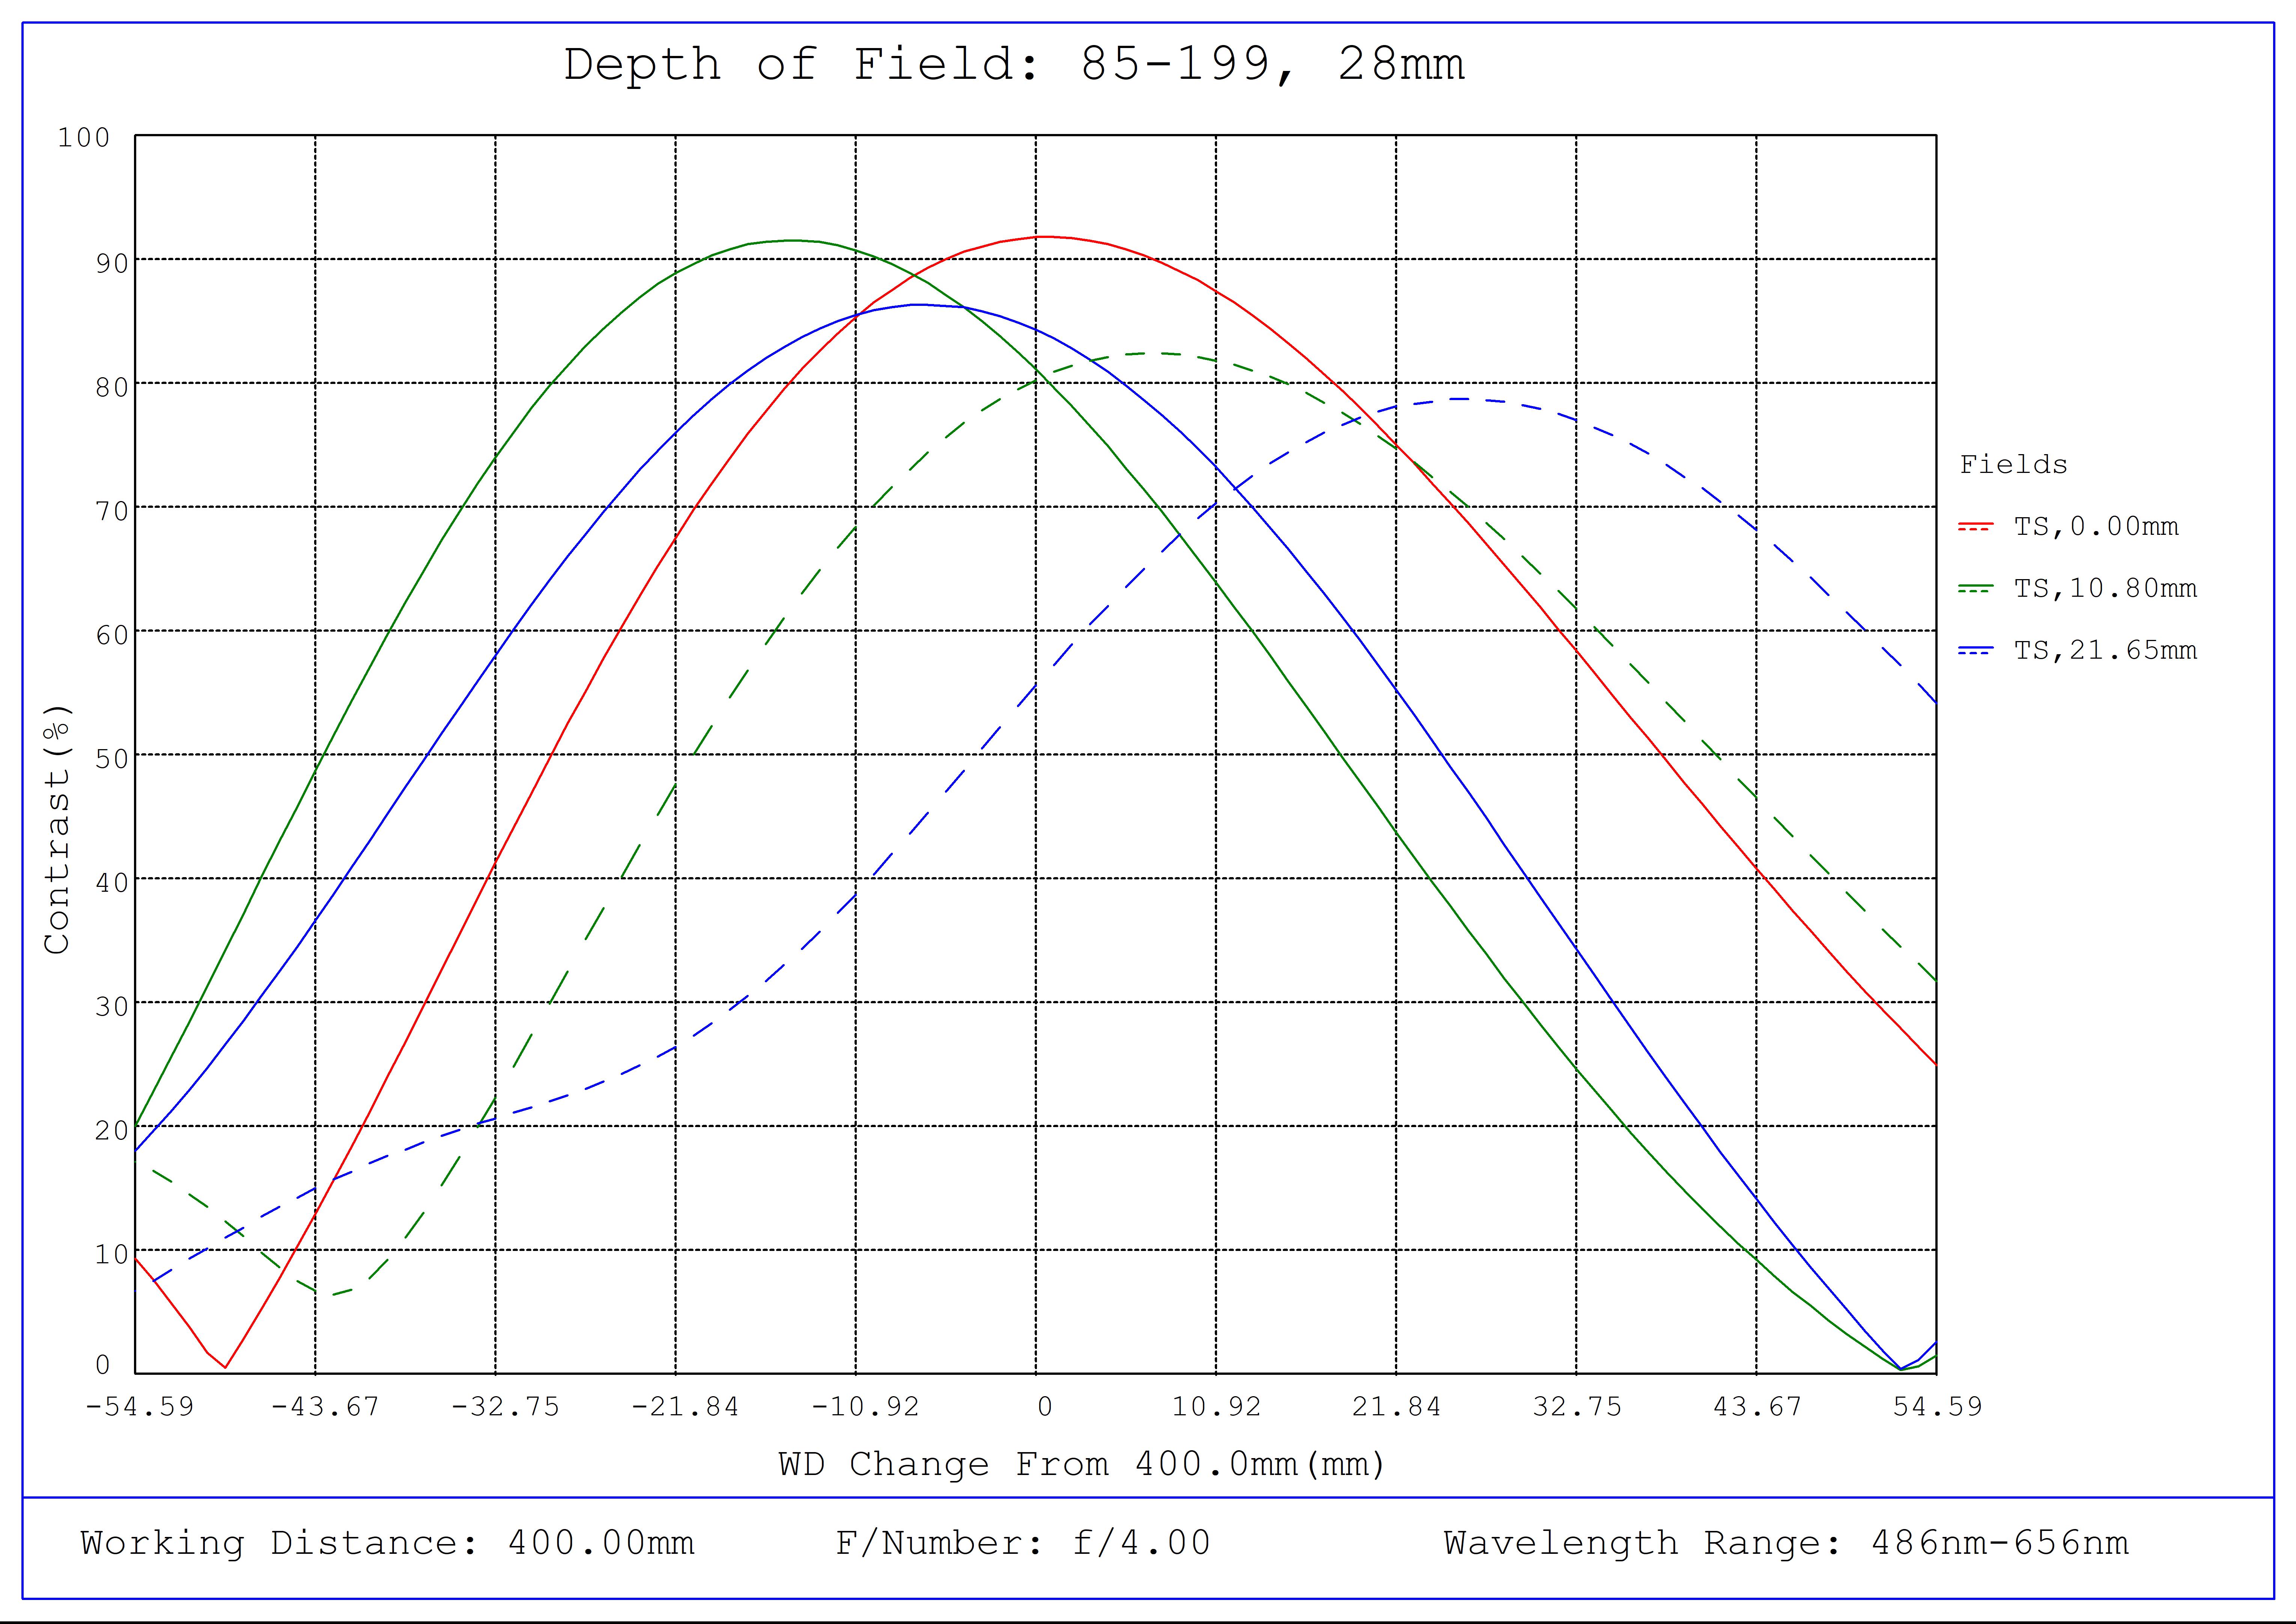 #85-199, 28mm Short Working Distance, LF Series Fixed Focal Length Lens, Depth of Field Plot, 400mm Working Distance, f4